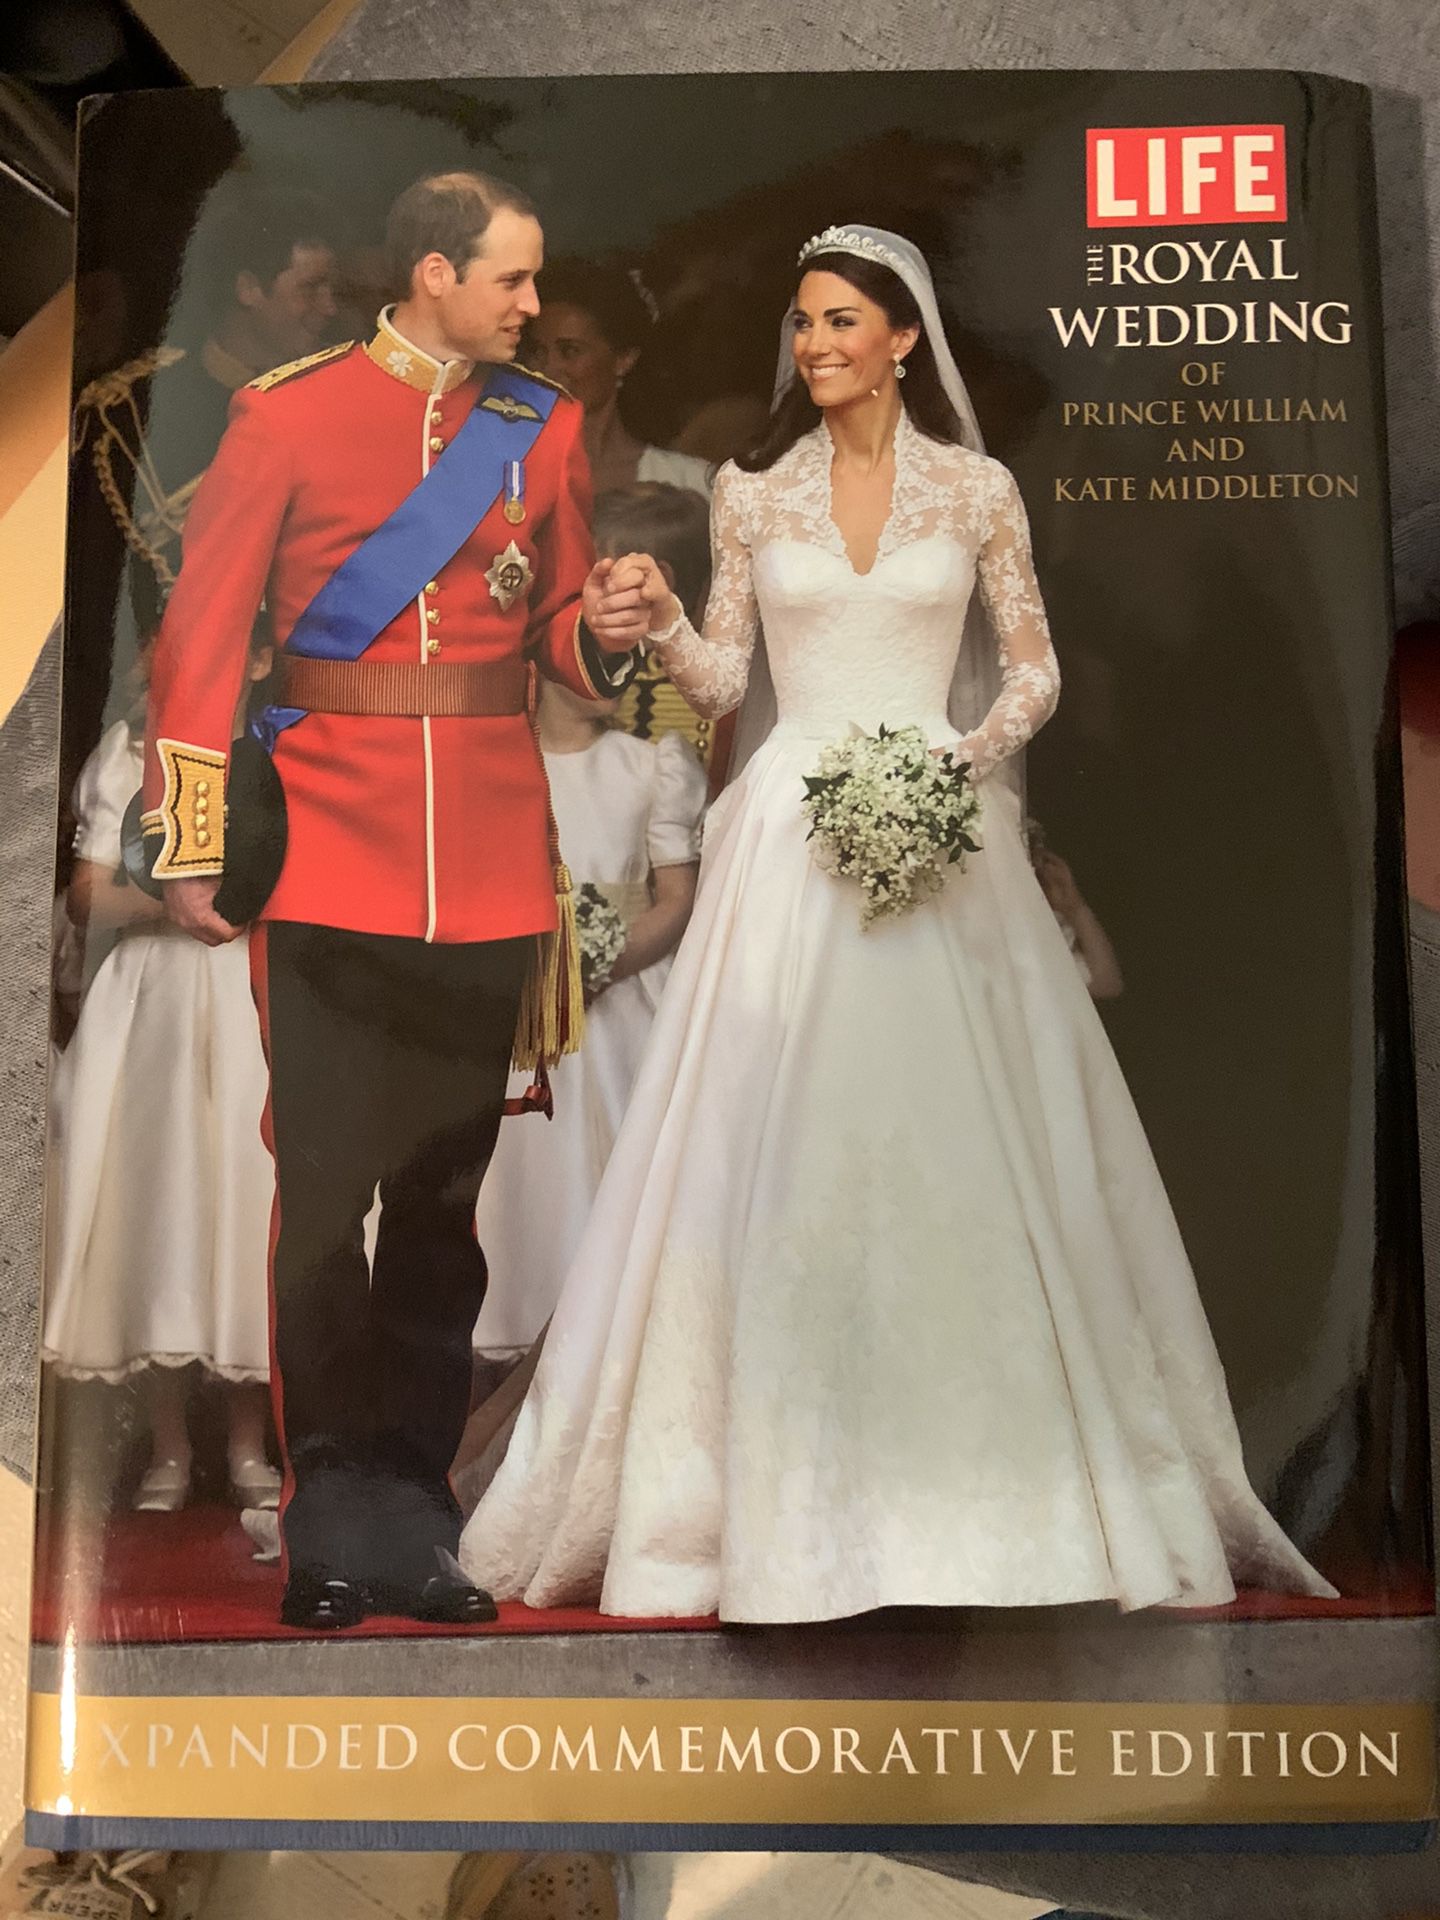 Brand new book of the royal wedding. 5 bucks